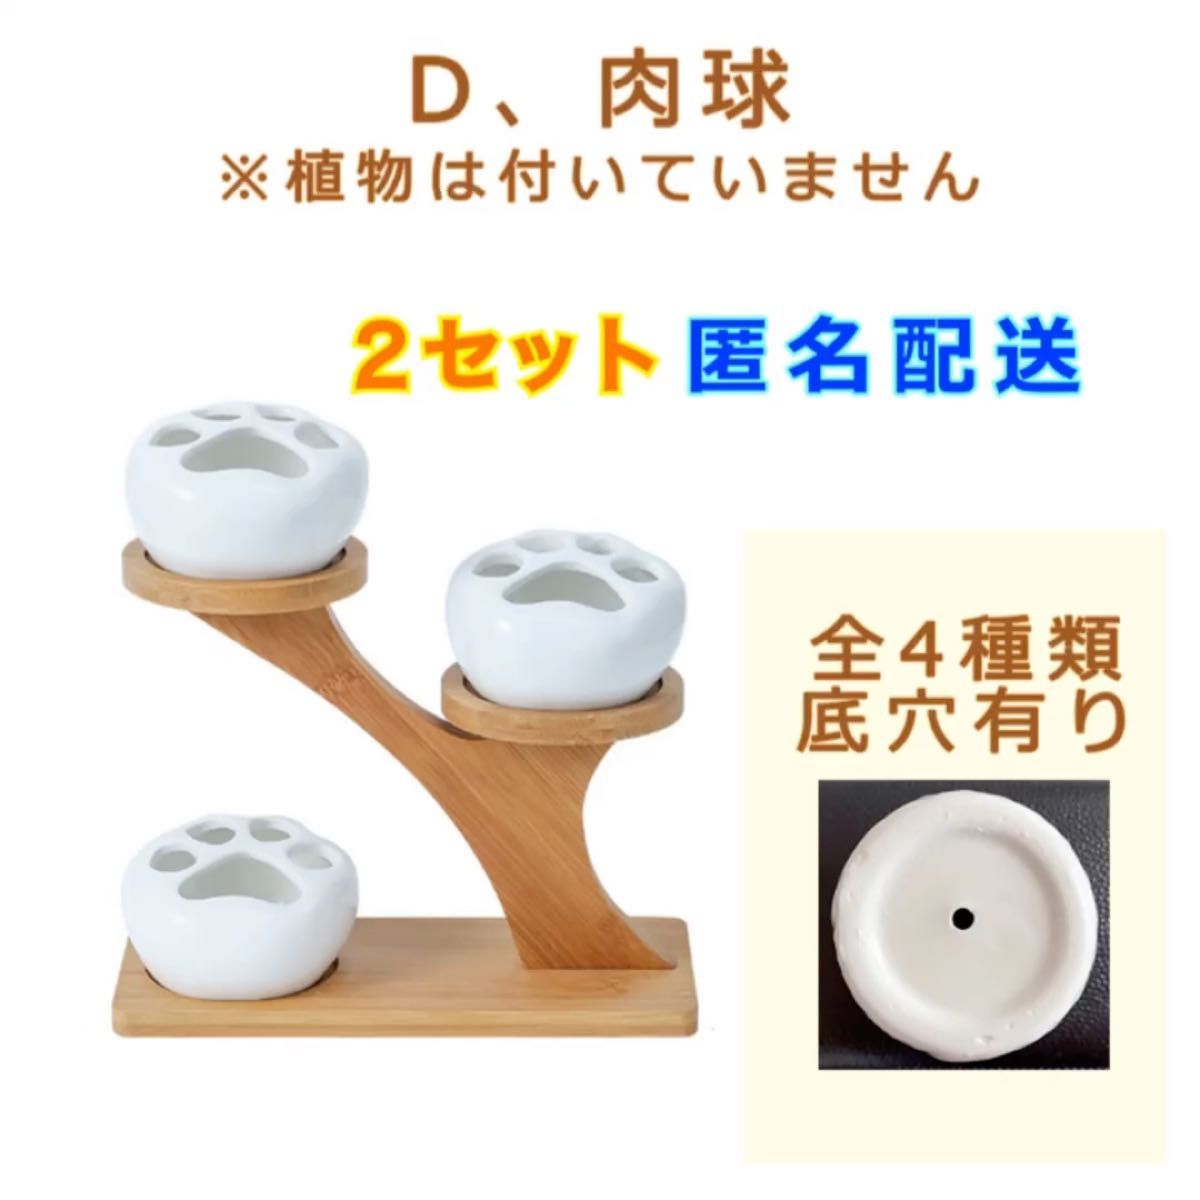 D-肉球型 2セット 陶器鉢 新品 竹製スタンドホルダー付き 鉢+スタンドセット 植木鉢 肉球型 底穴有り 陶器